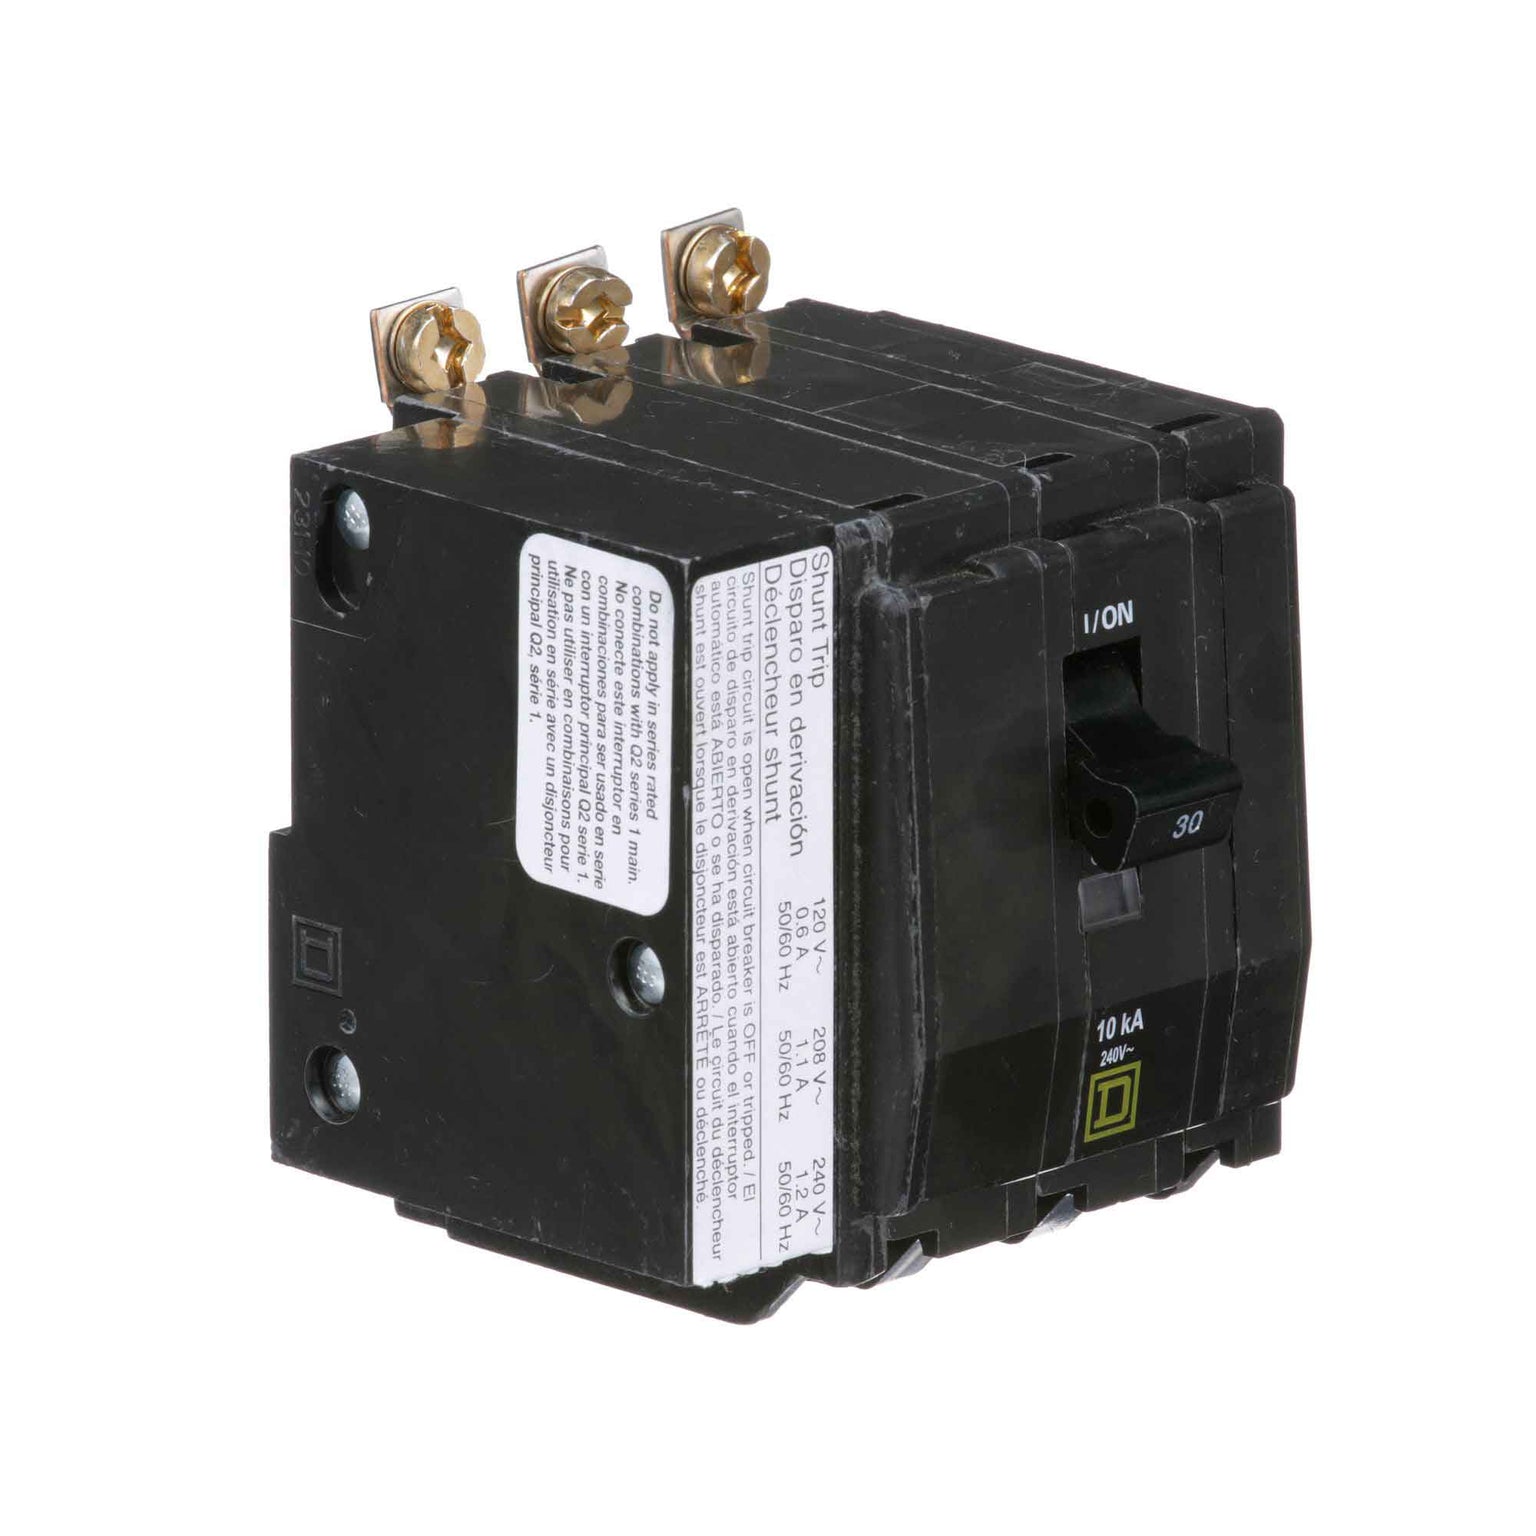 QOB3301021 - Square D - Molded Case Circuit Breaker